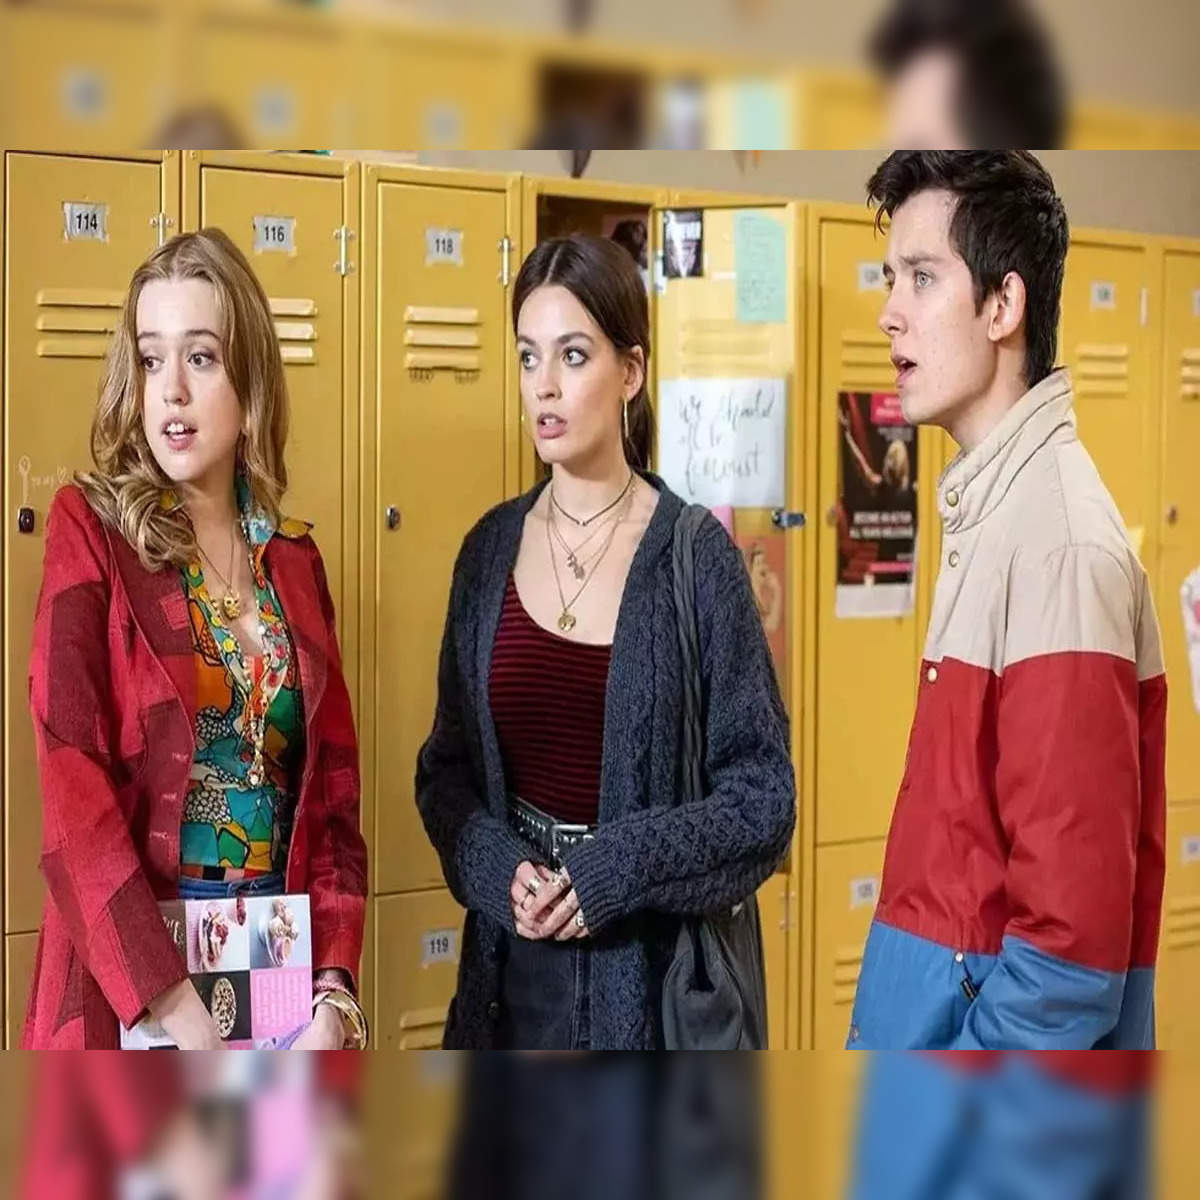 Sex Education Season 4 Cast Guide - Netflix Tudum